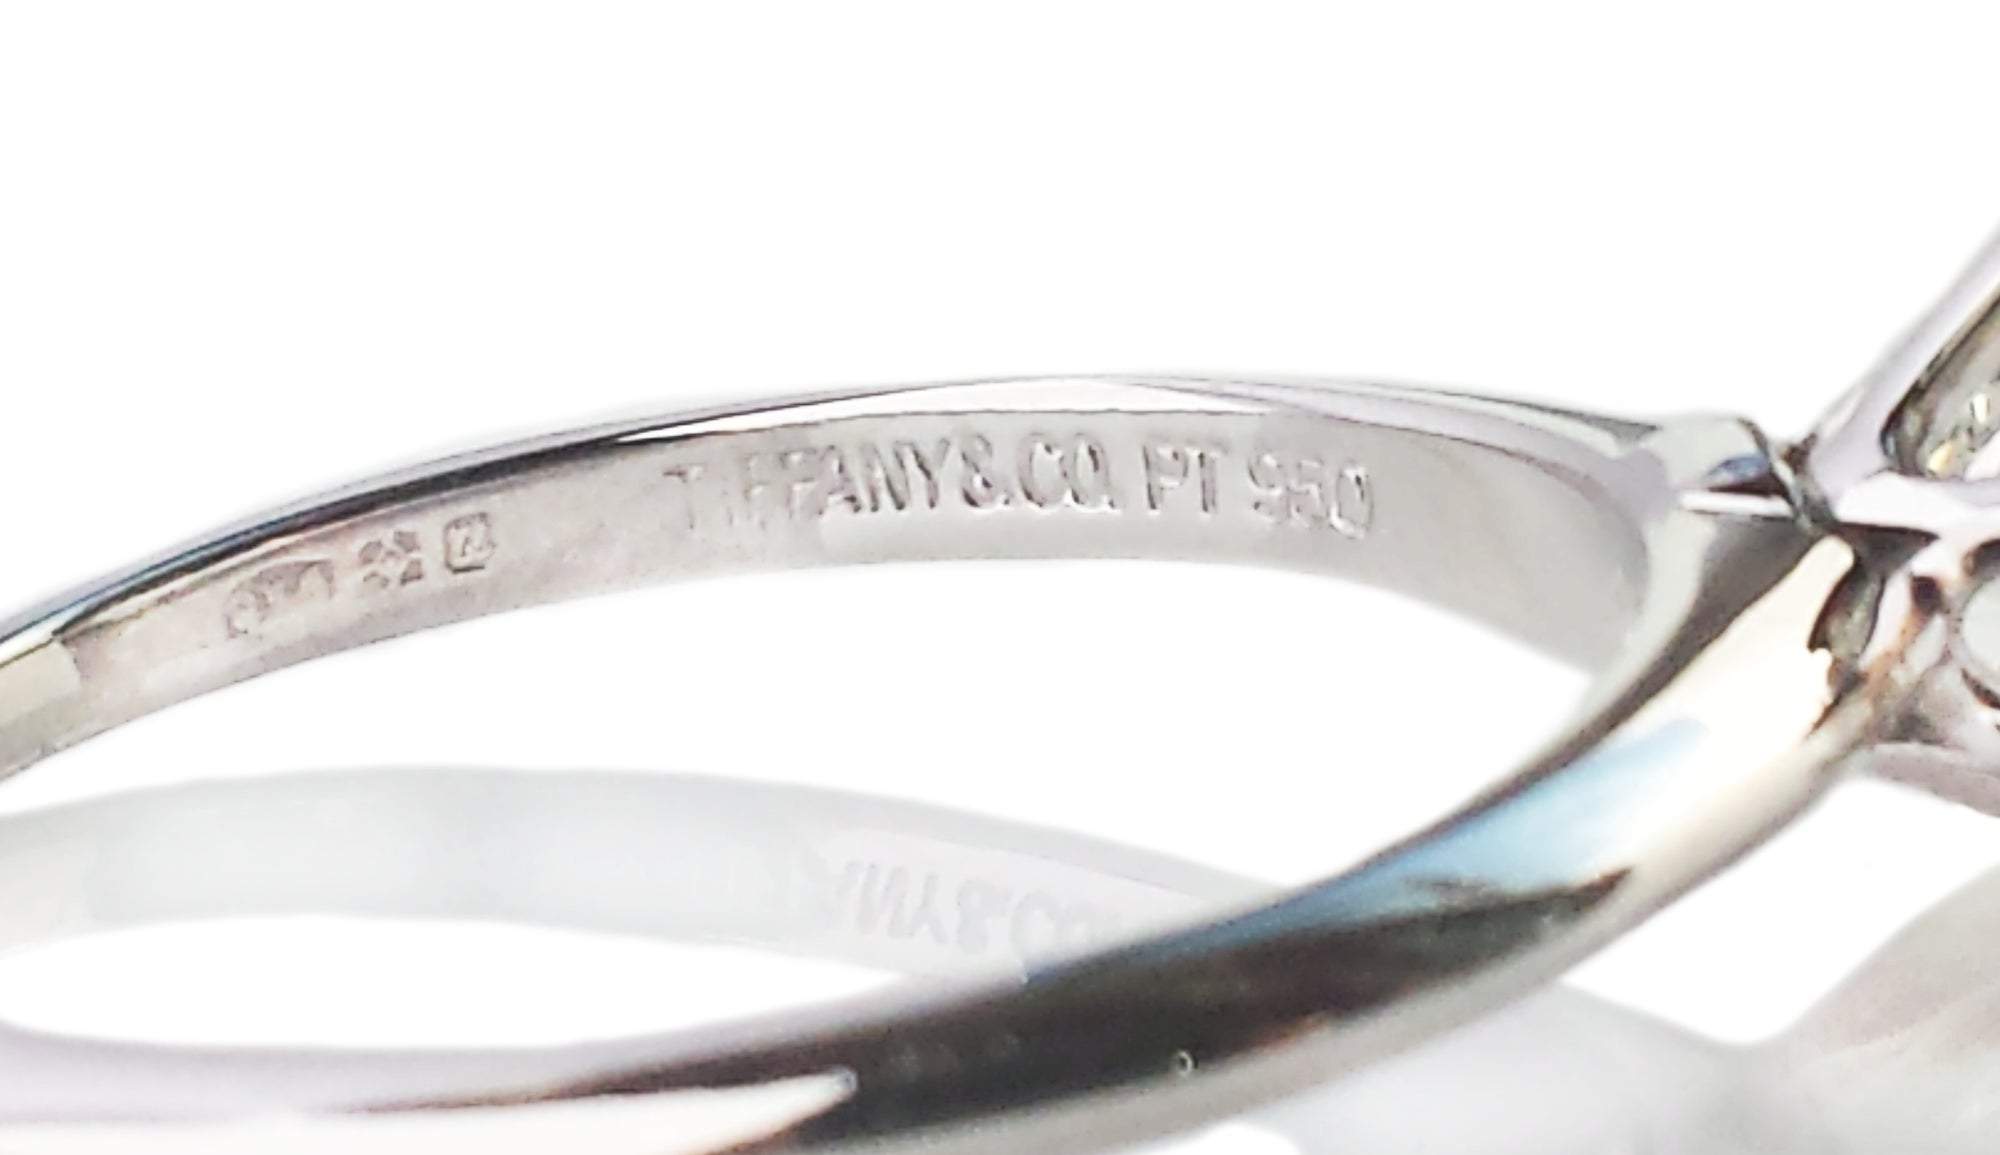 Tiffany & Co. 1.02ct H/VS1 Round Brilliant Cut Diamond Engagement Ring